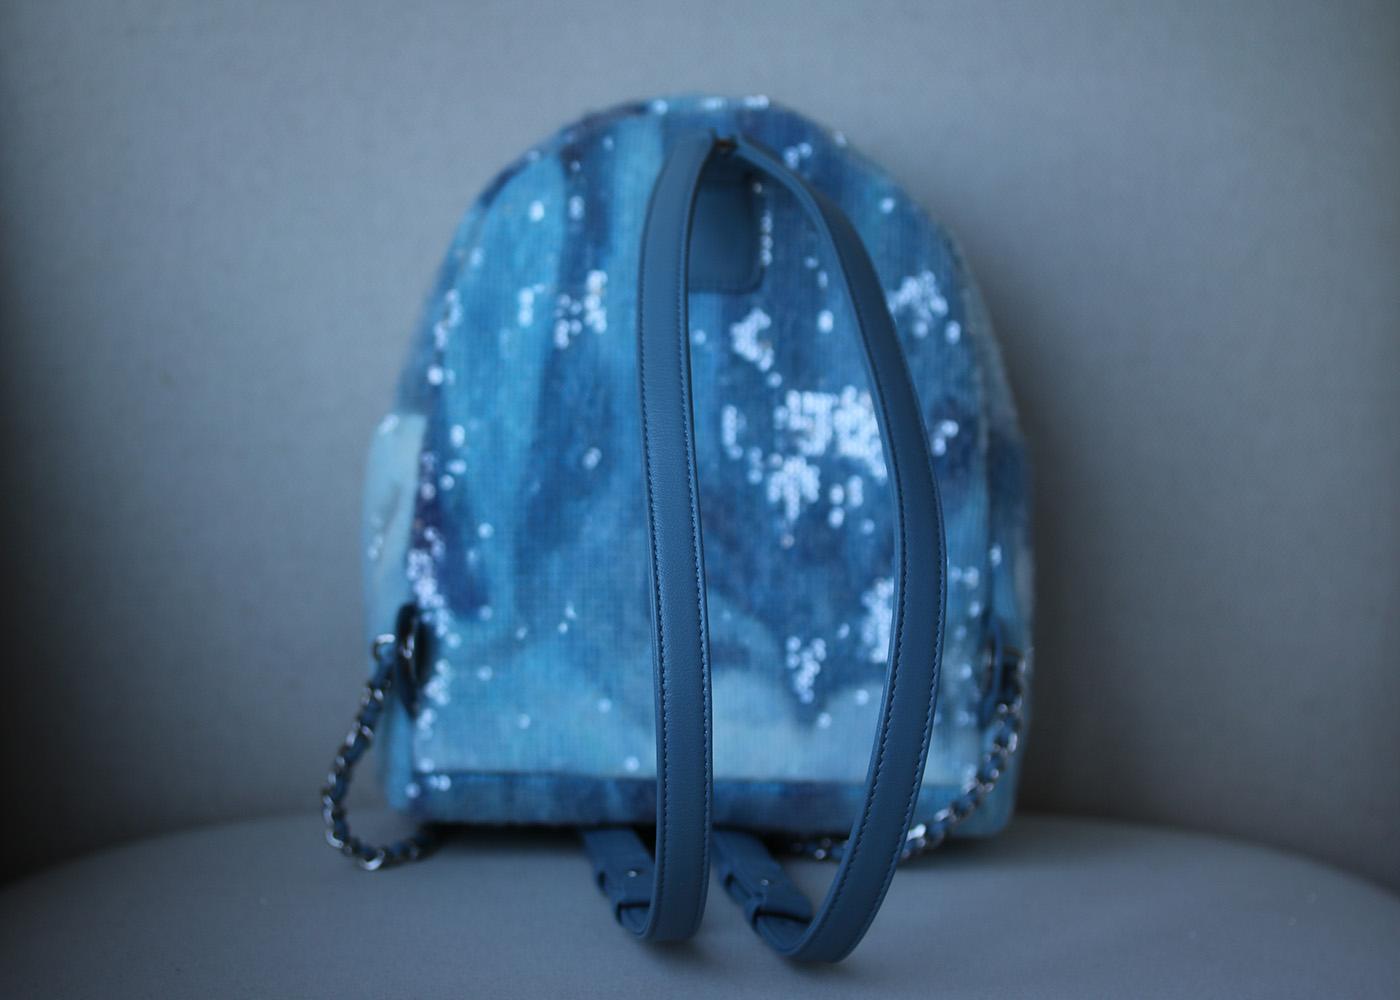 chanel sequin backpack